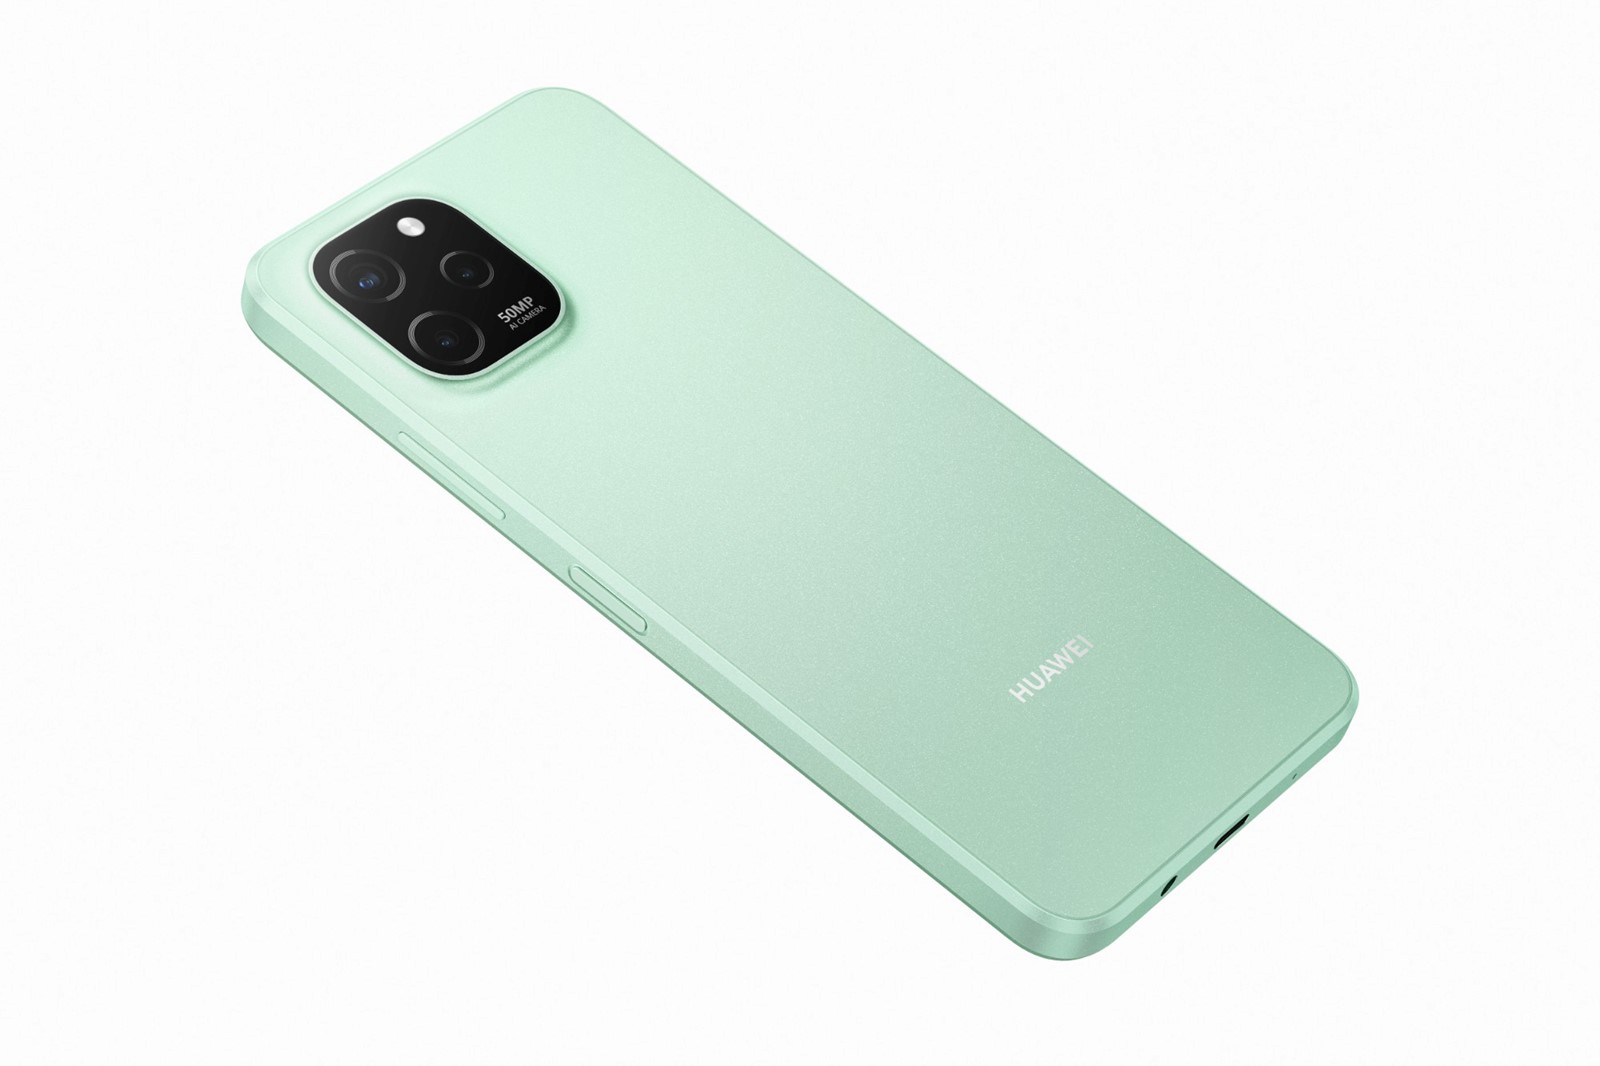 Lansiran je Huawei Nova Y61 pametni telefon - Promo @ Bug.hr